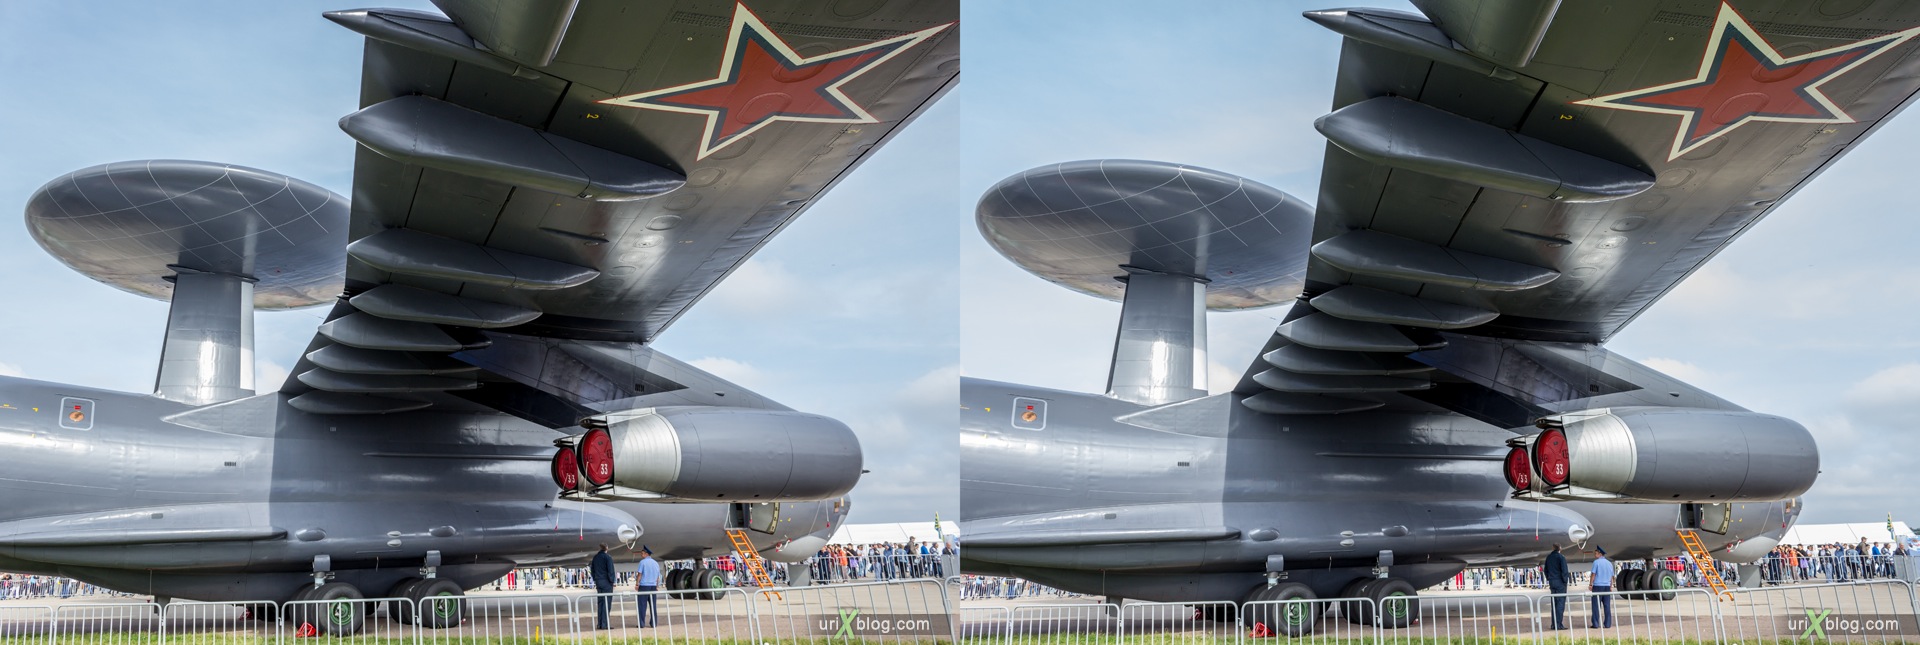 2013, A-50, MAKS, International Aviation and Space Salon, Russia, Ramenskoye airfield, airplane, 3D, stereo pair, cross-eyed, crossview, cross view stereo pair, stereoscopic